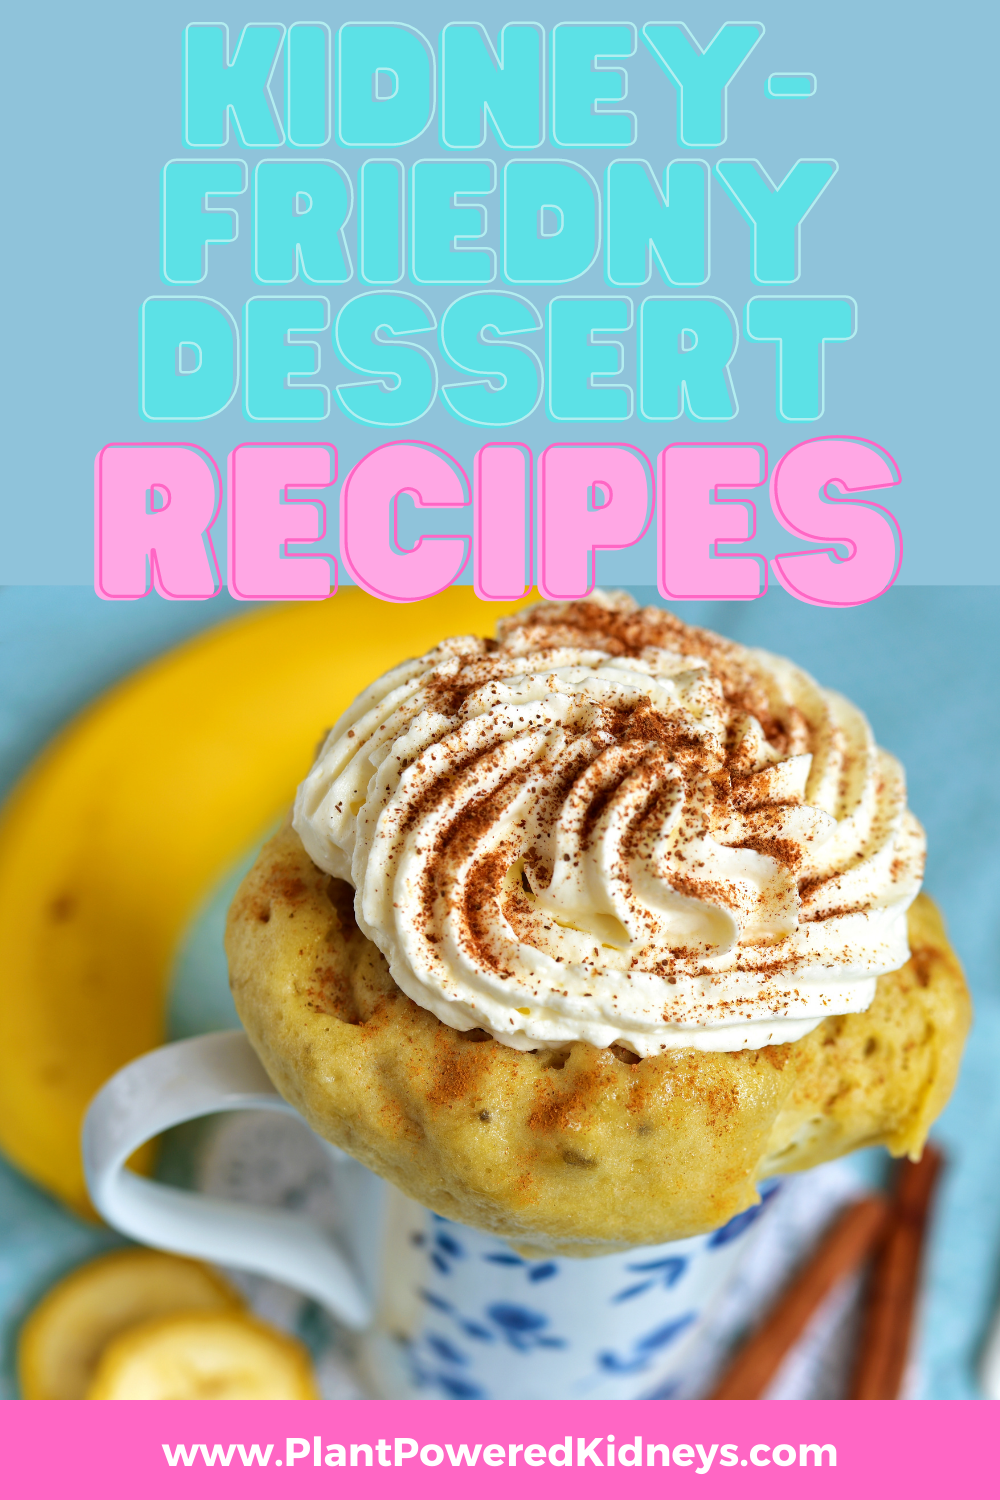 Kidney-Friendly desserts recipes
mug cake cinnamon